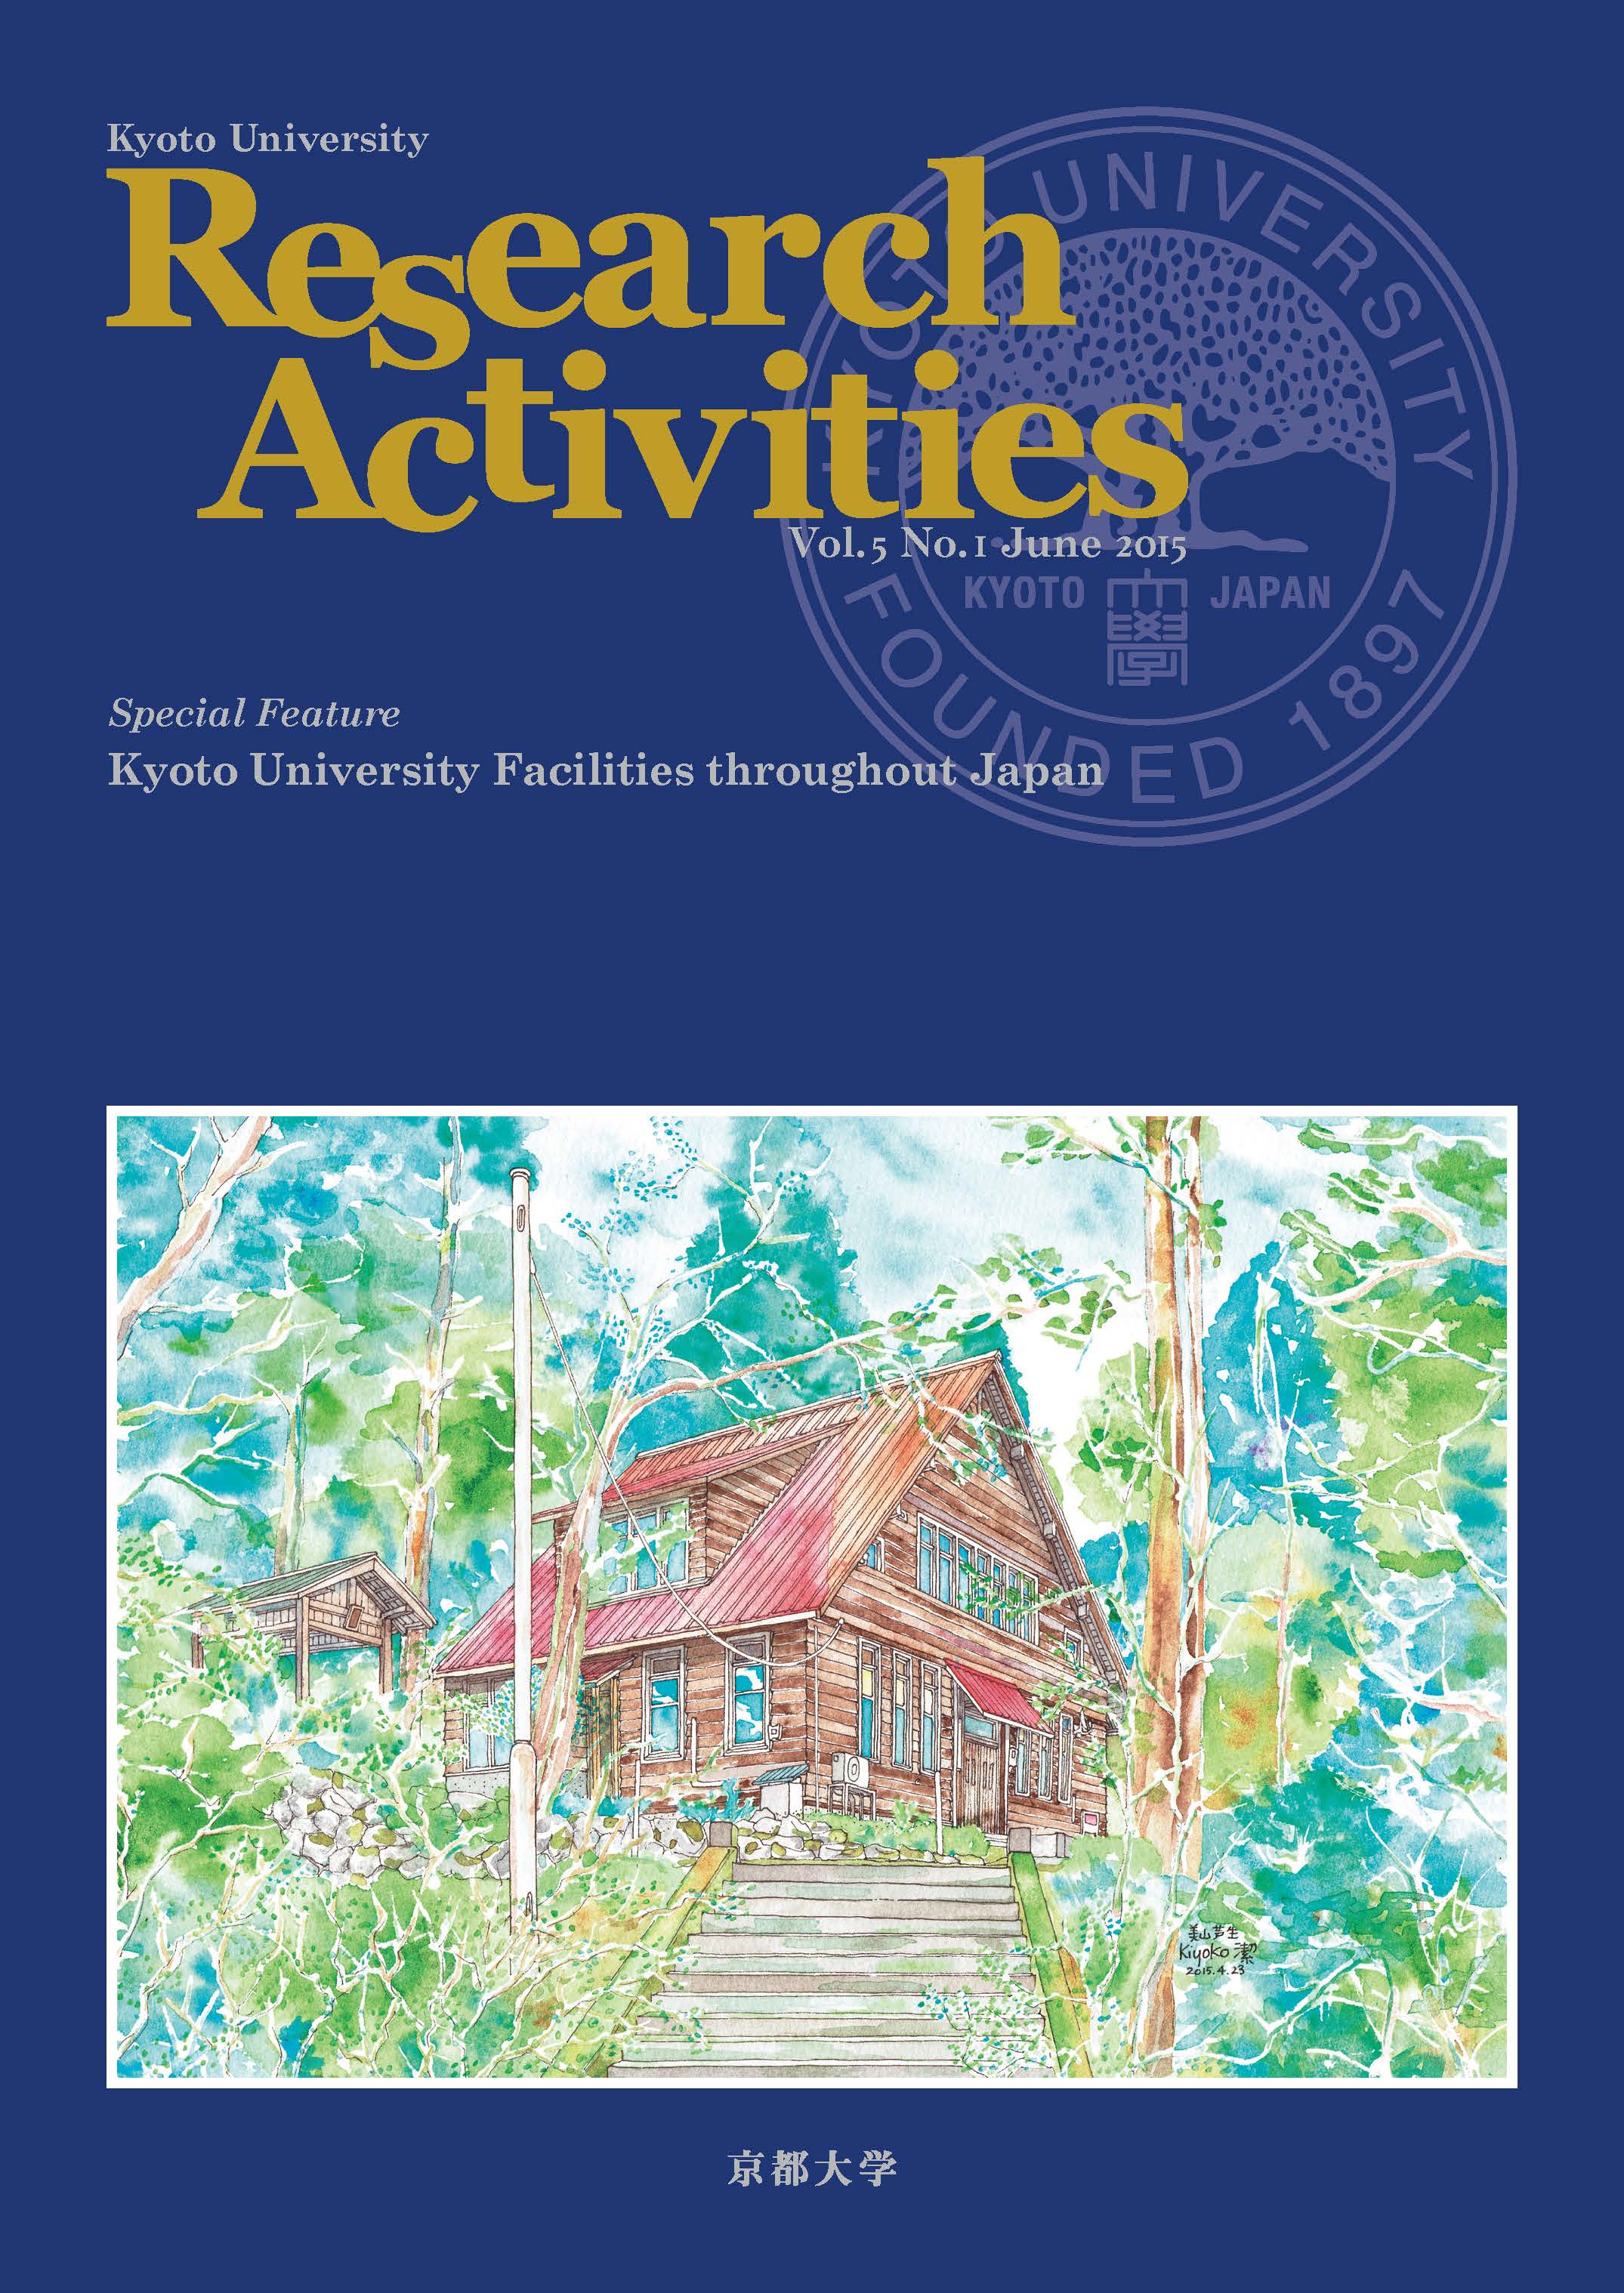 Kyoto University Research Activities Vol.5 No.1 June 2015